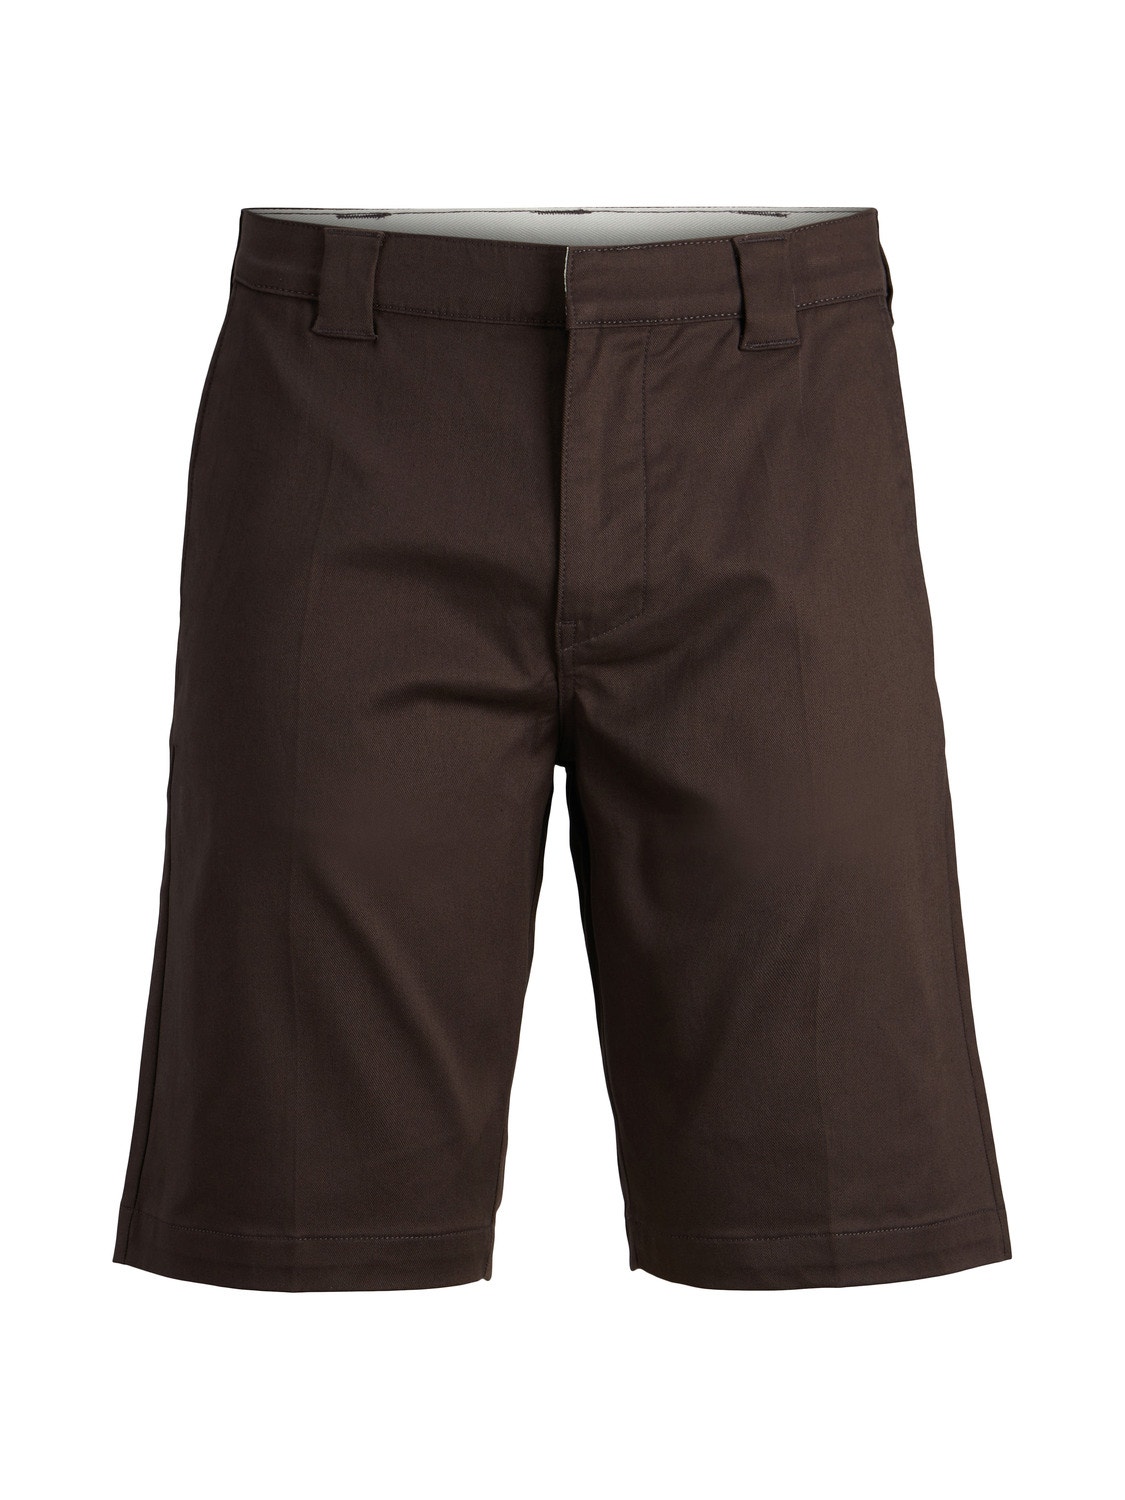 Jack & Jones Regular Fit Chino shorts -Seal Brown - 12205367